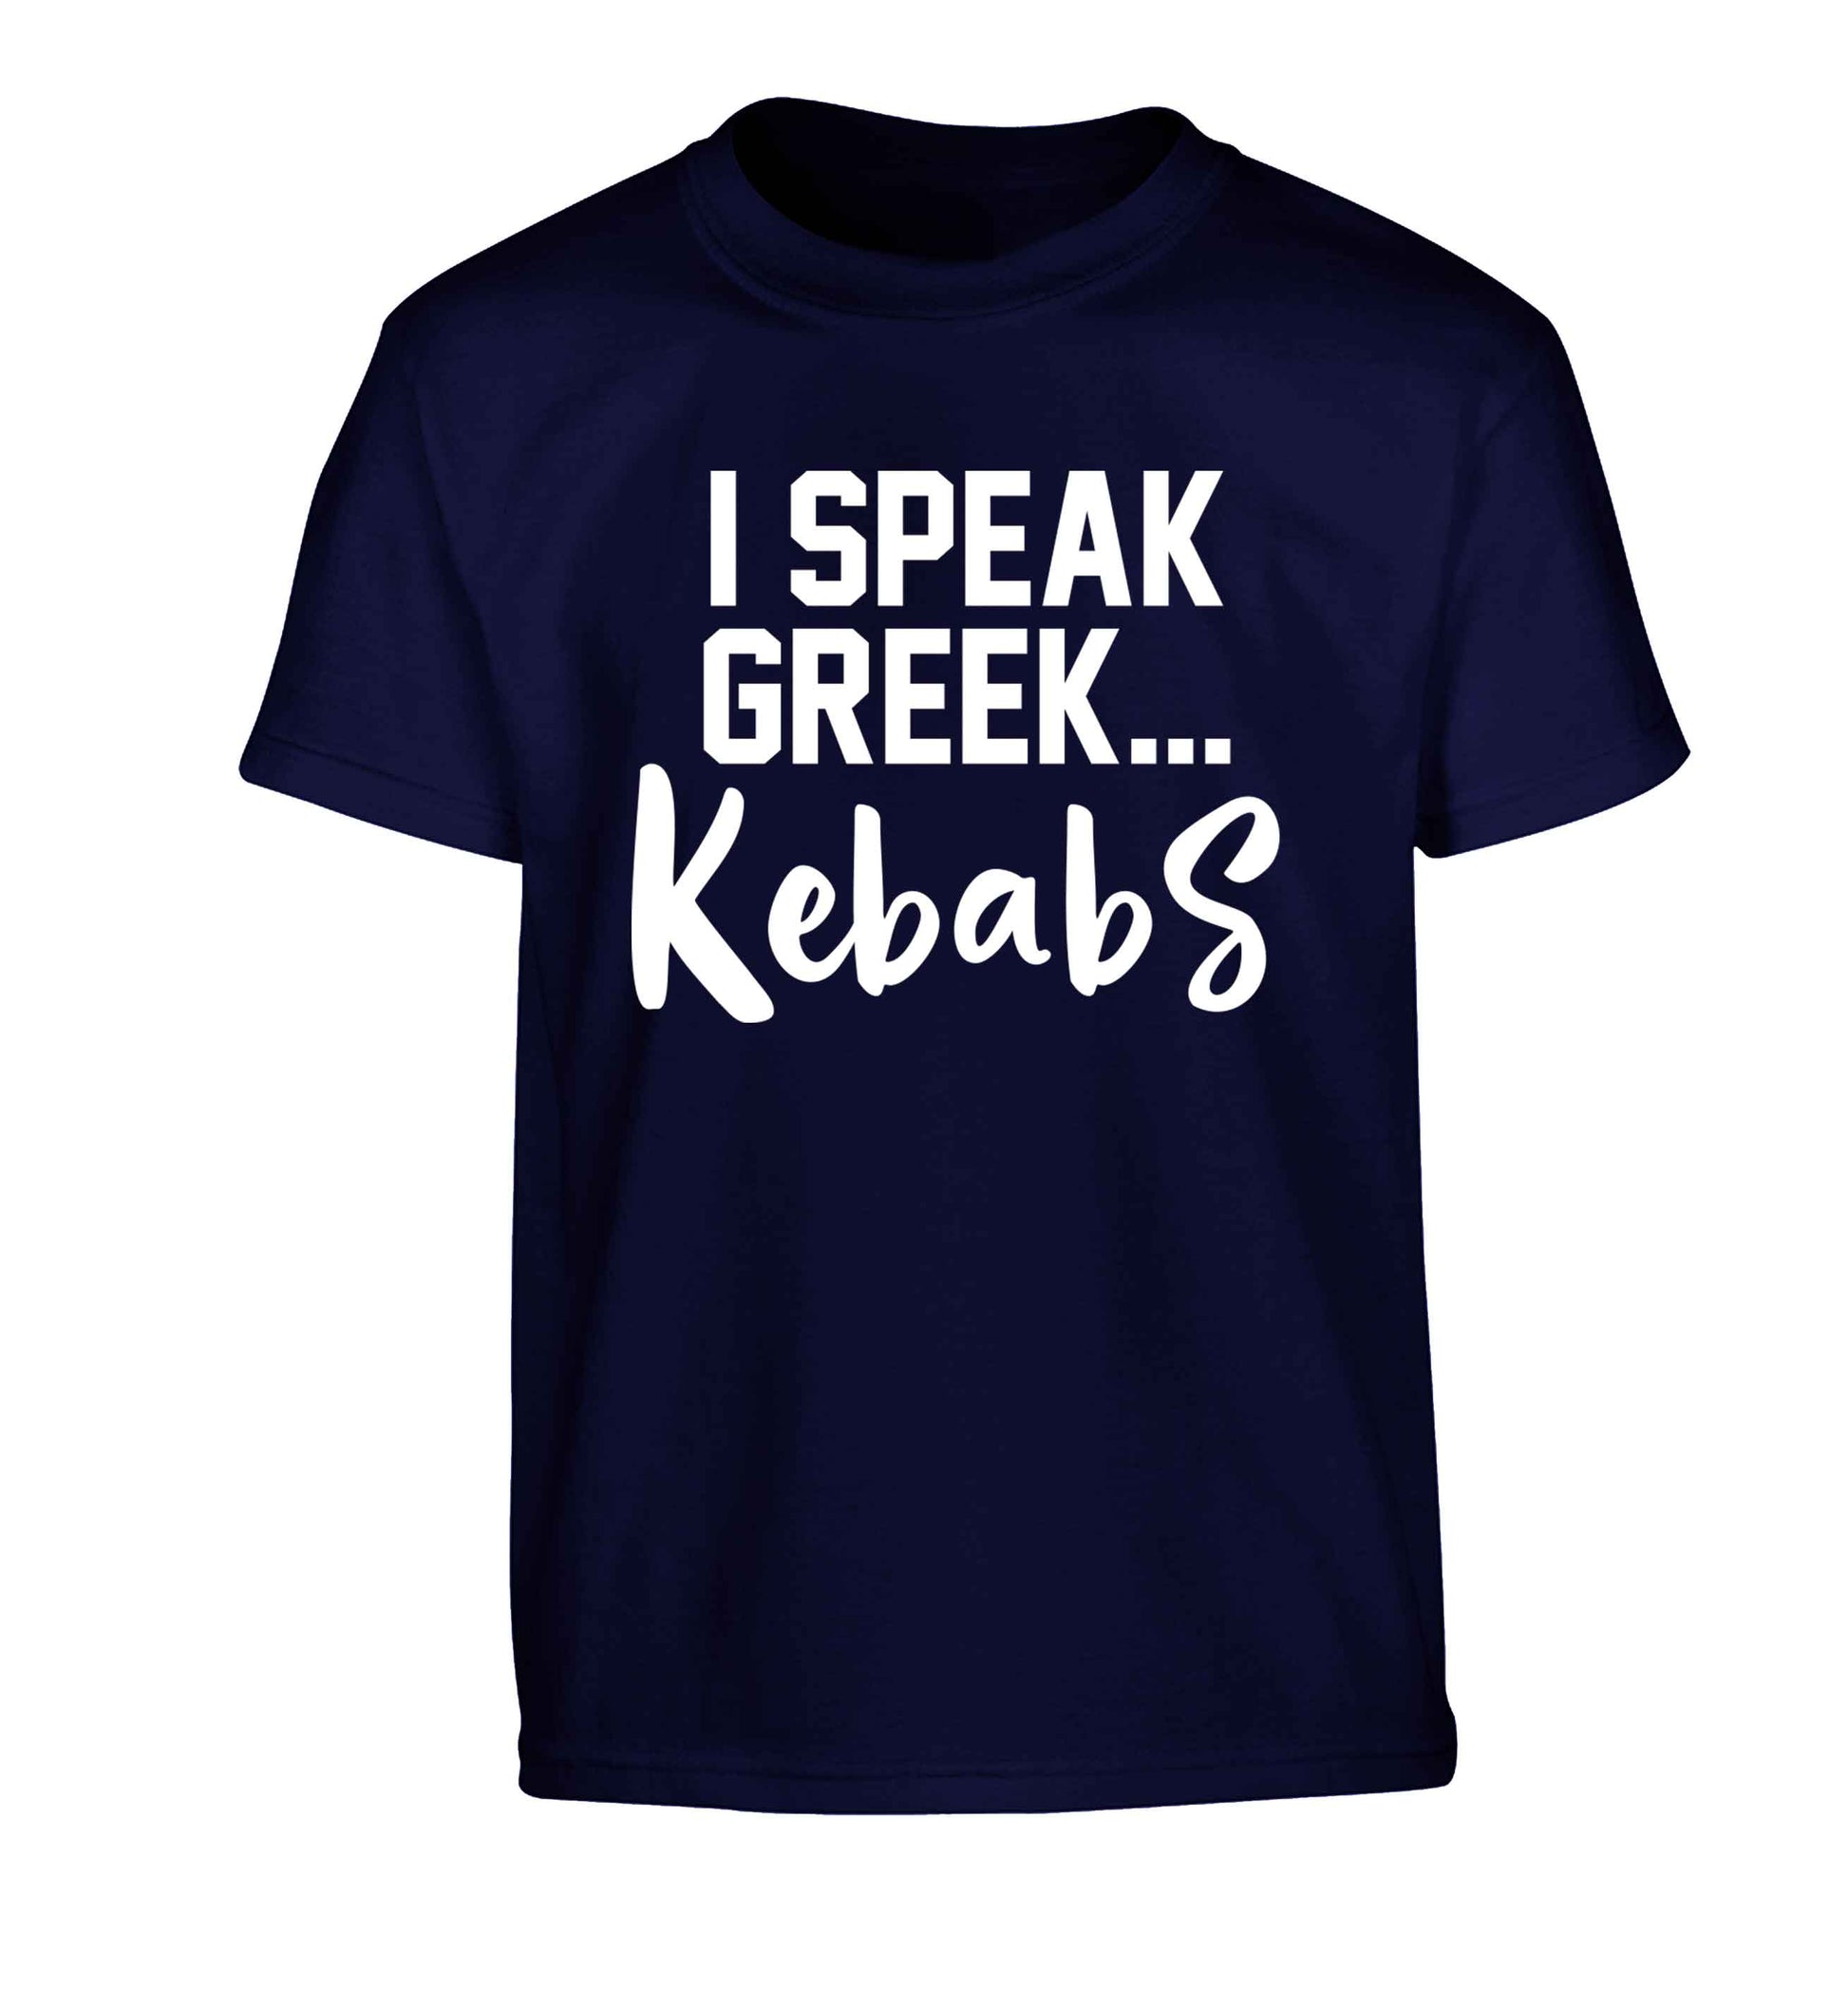 I speak Greek...kebabs Children's navy Tshirt 12-13 Years